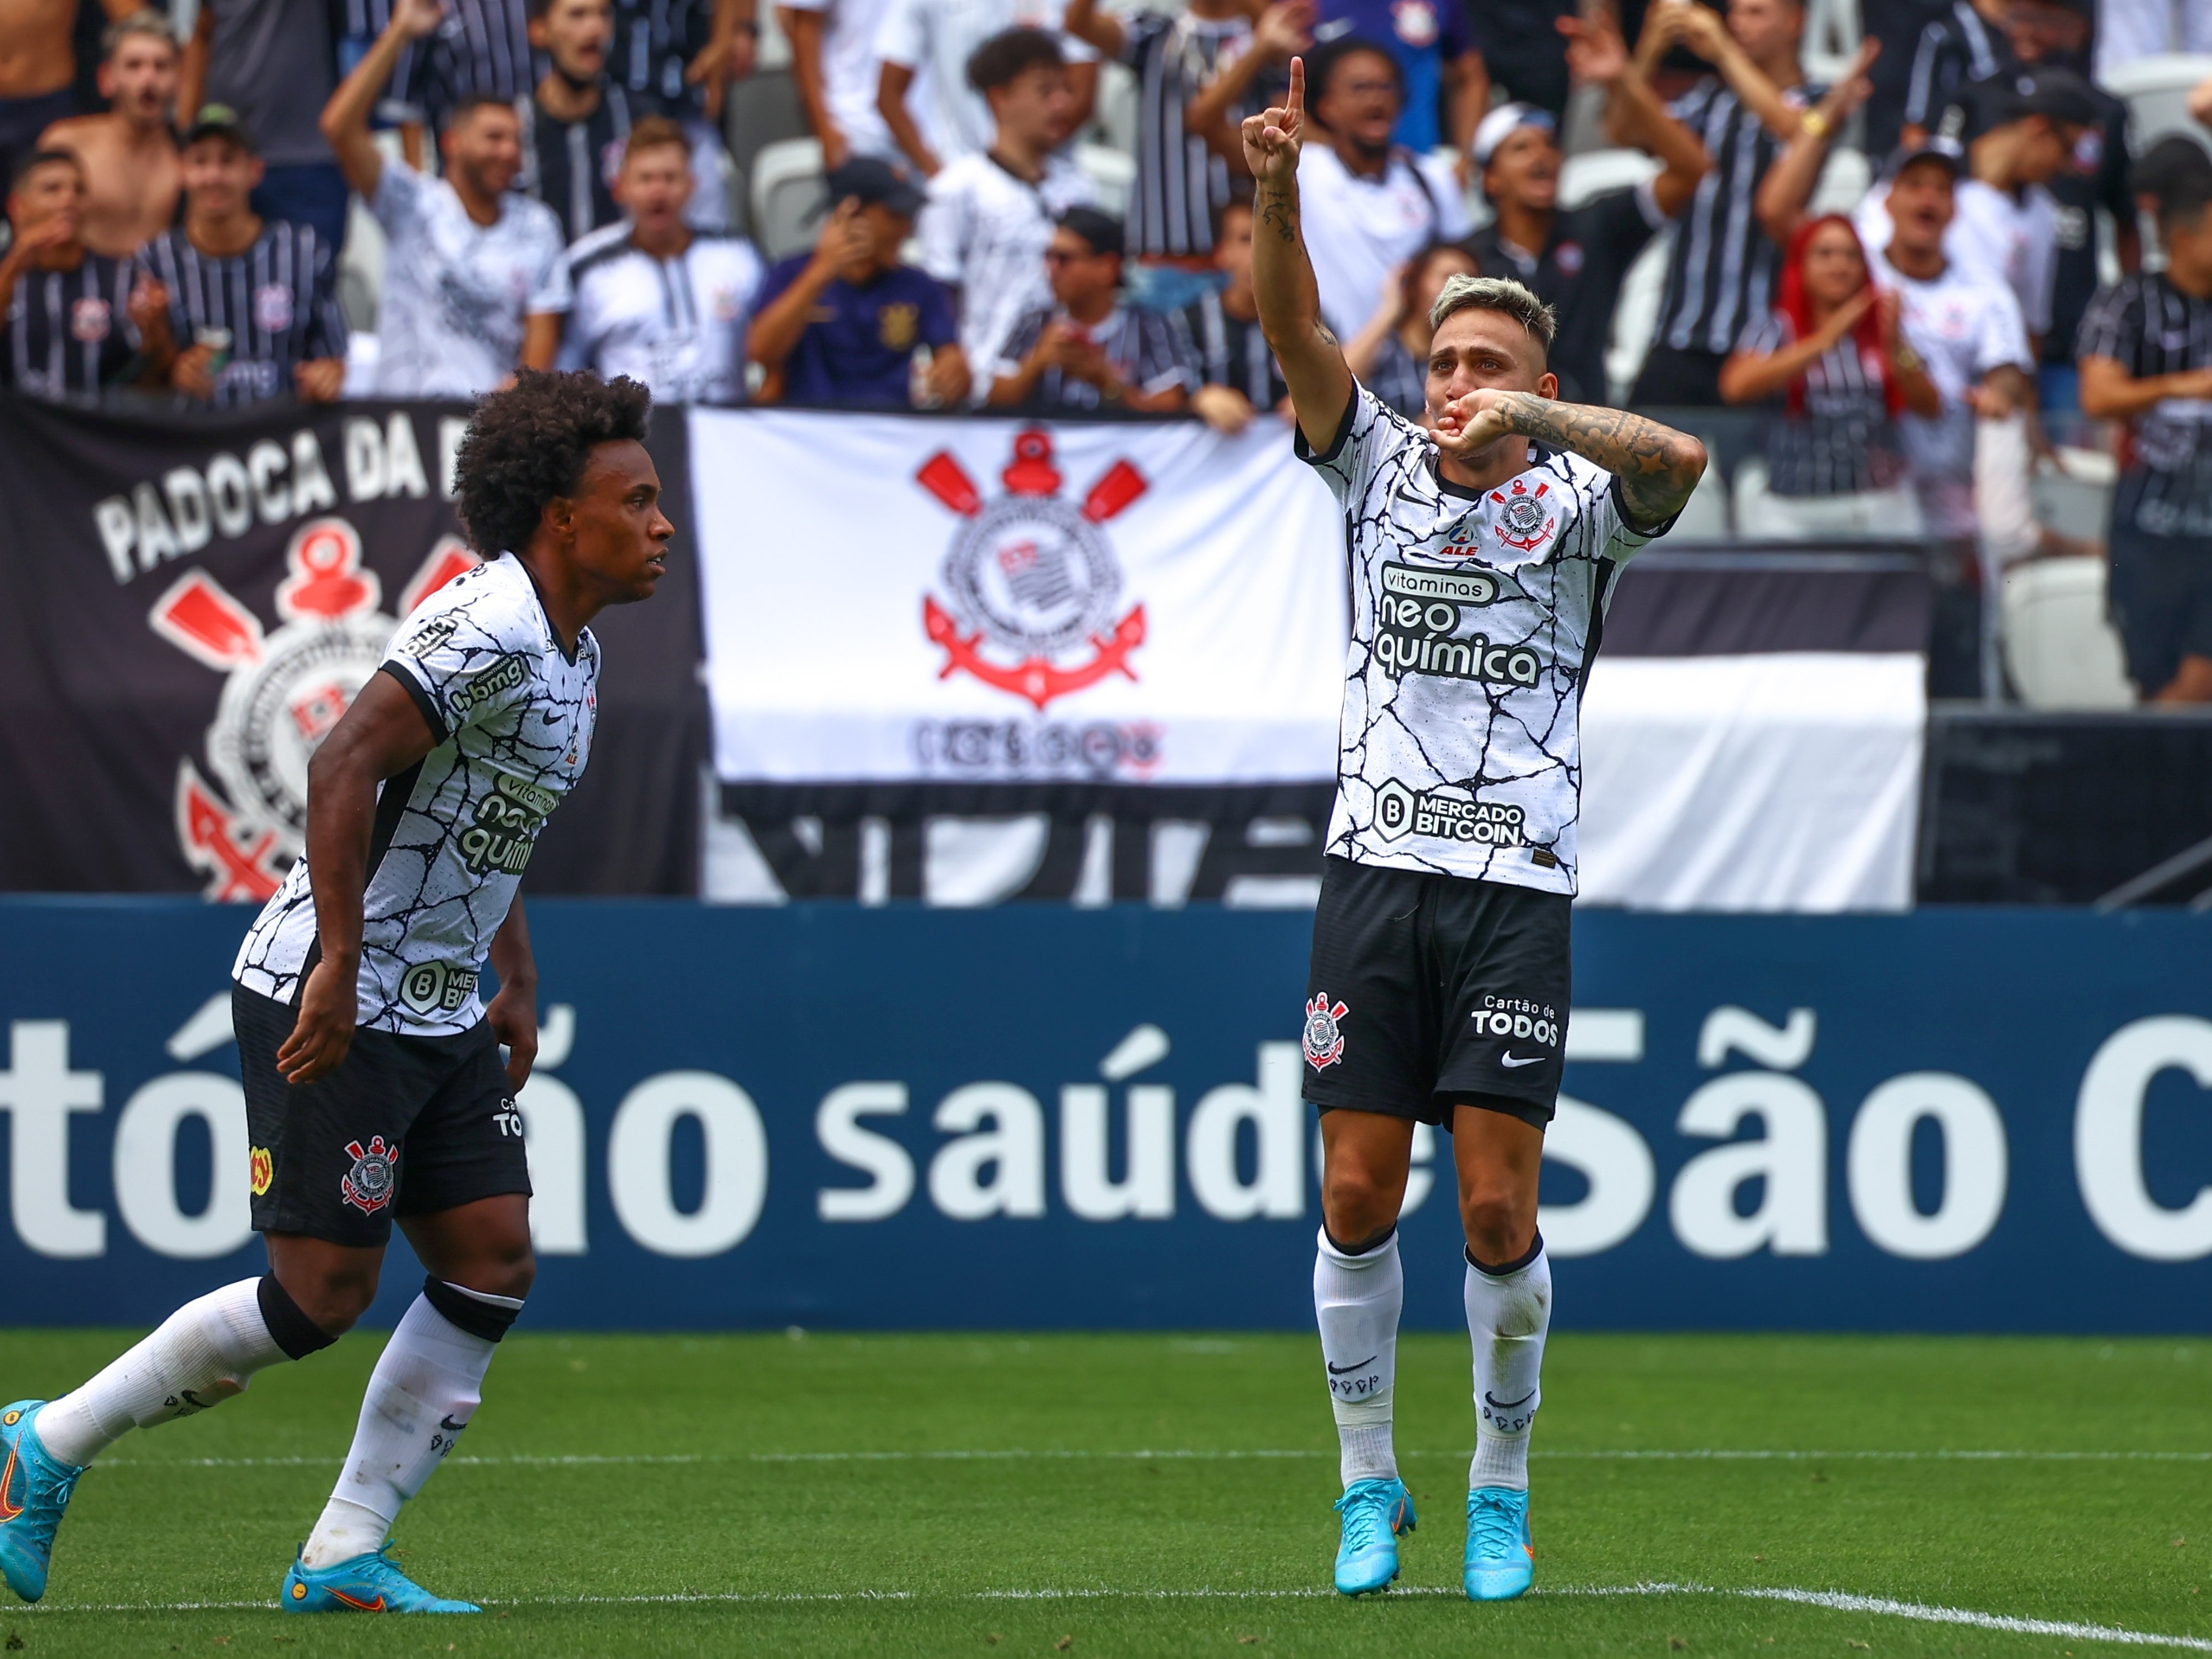 Corinthians vence Bragantino e fica mais perto do título da Copa